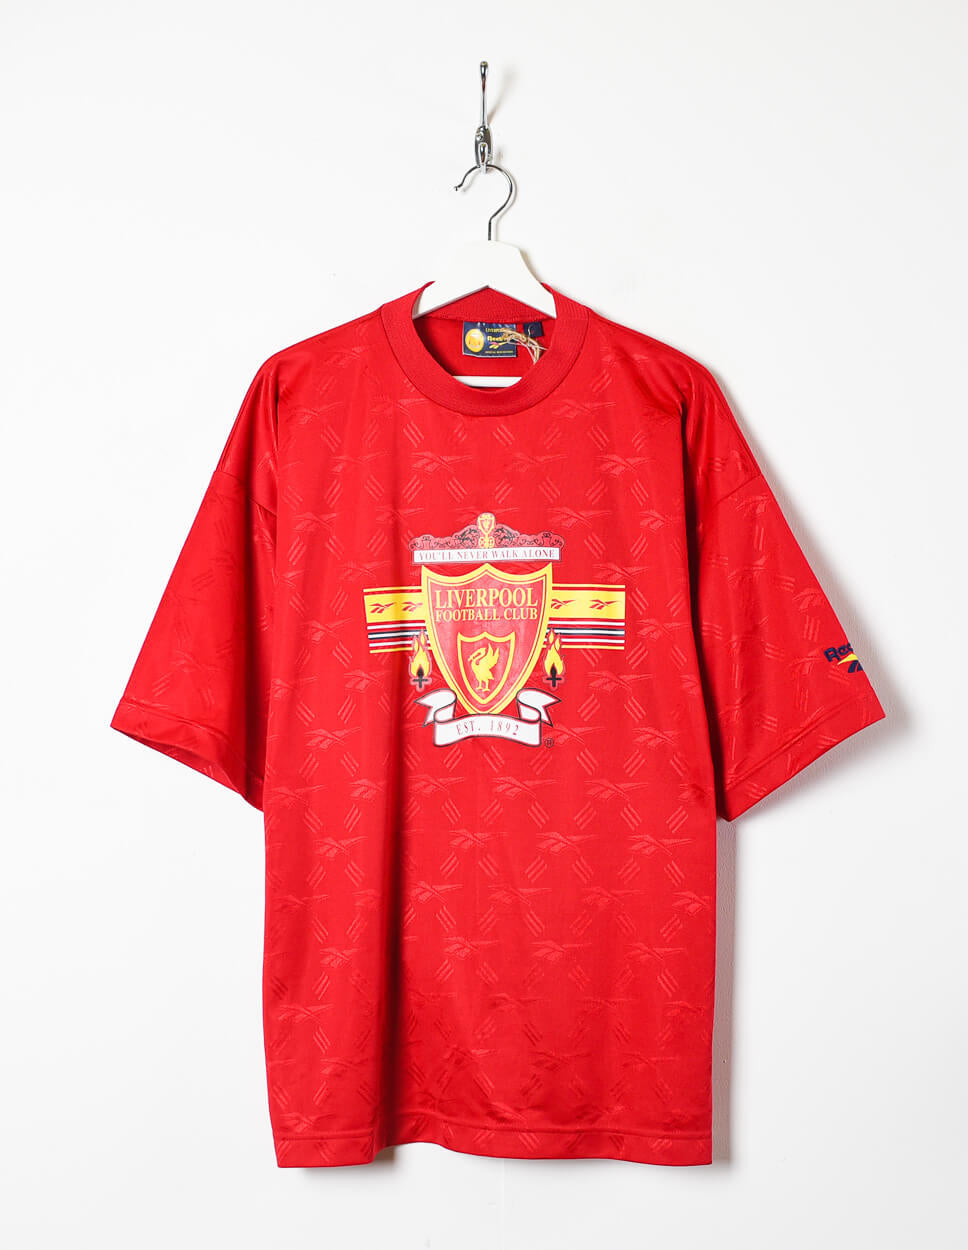 Red Reebok Liverpool Training T-Shirt - X-Large